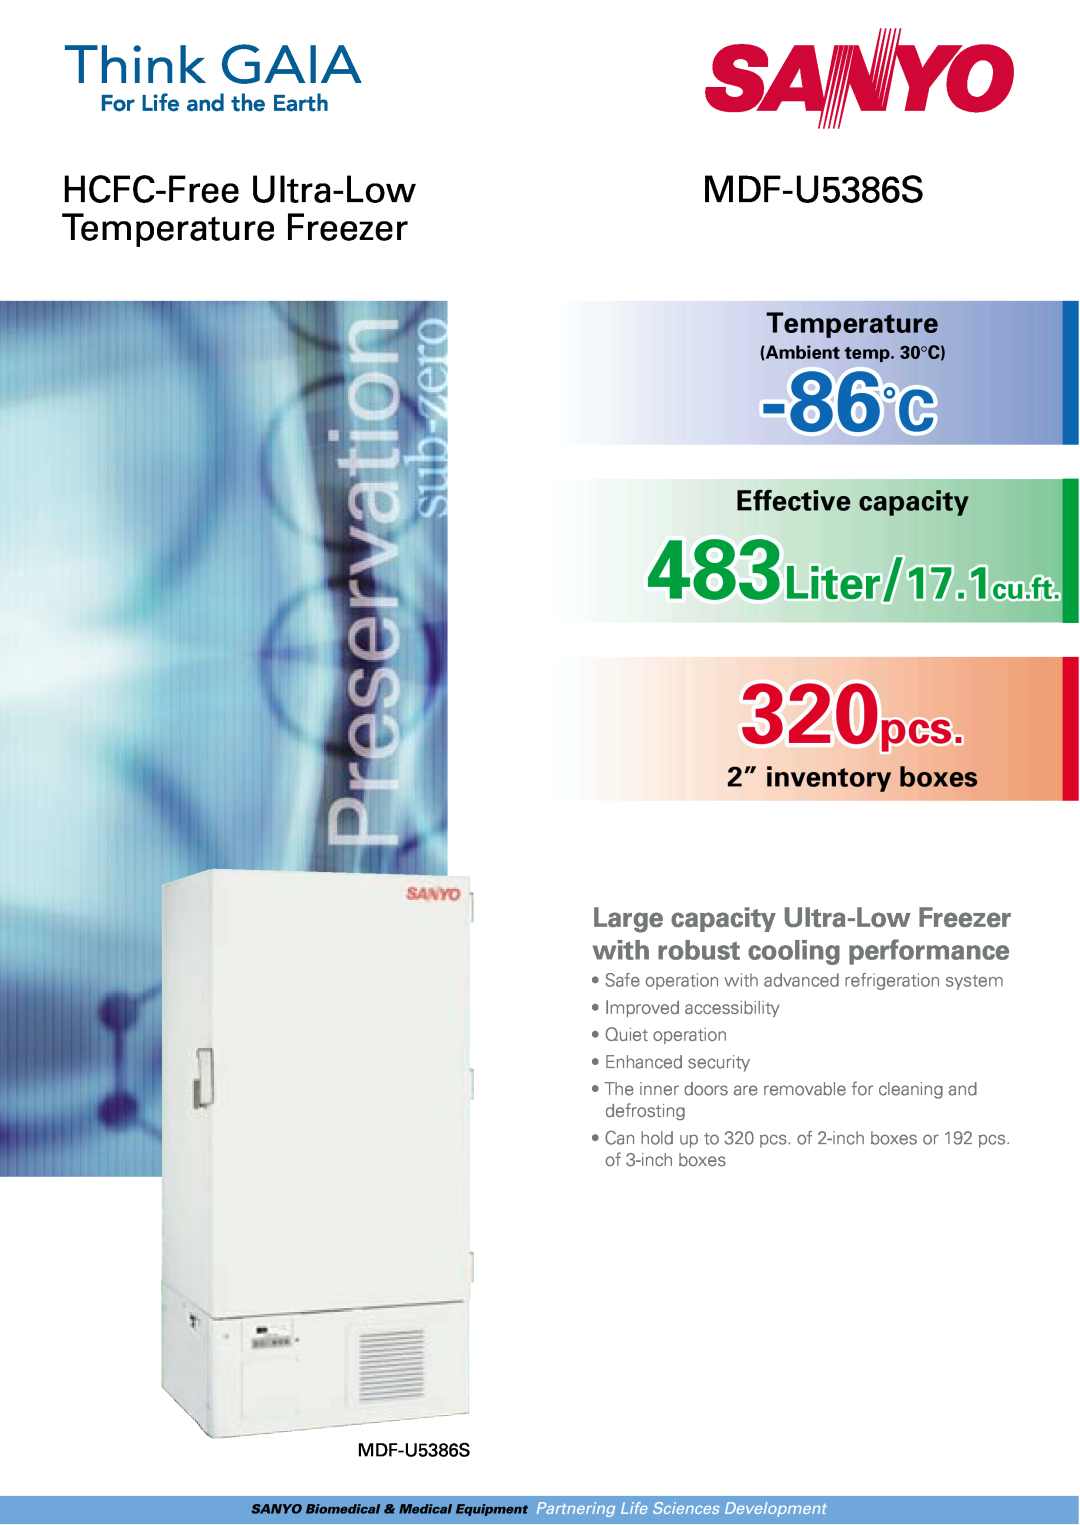 Sanyo MDF-U5386S manual Ambient temp. 30C, 86˚C, Liter/17.1cu.ft, 320pcs, HCFC-Free Ultra-Low, Temperature Freezer 